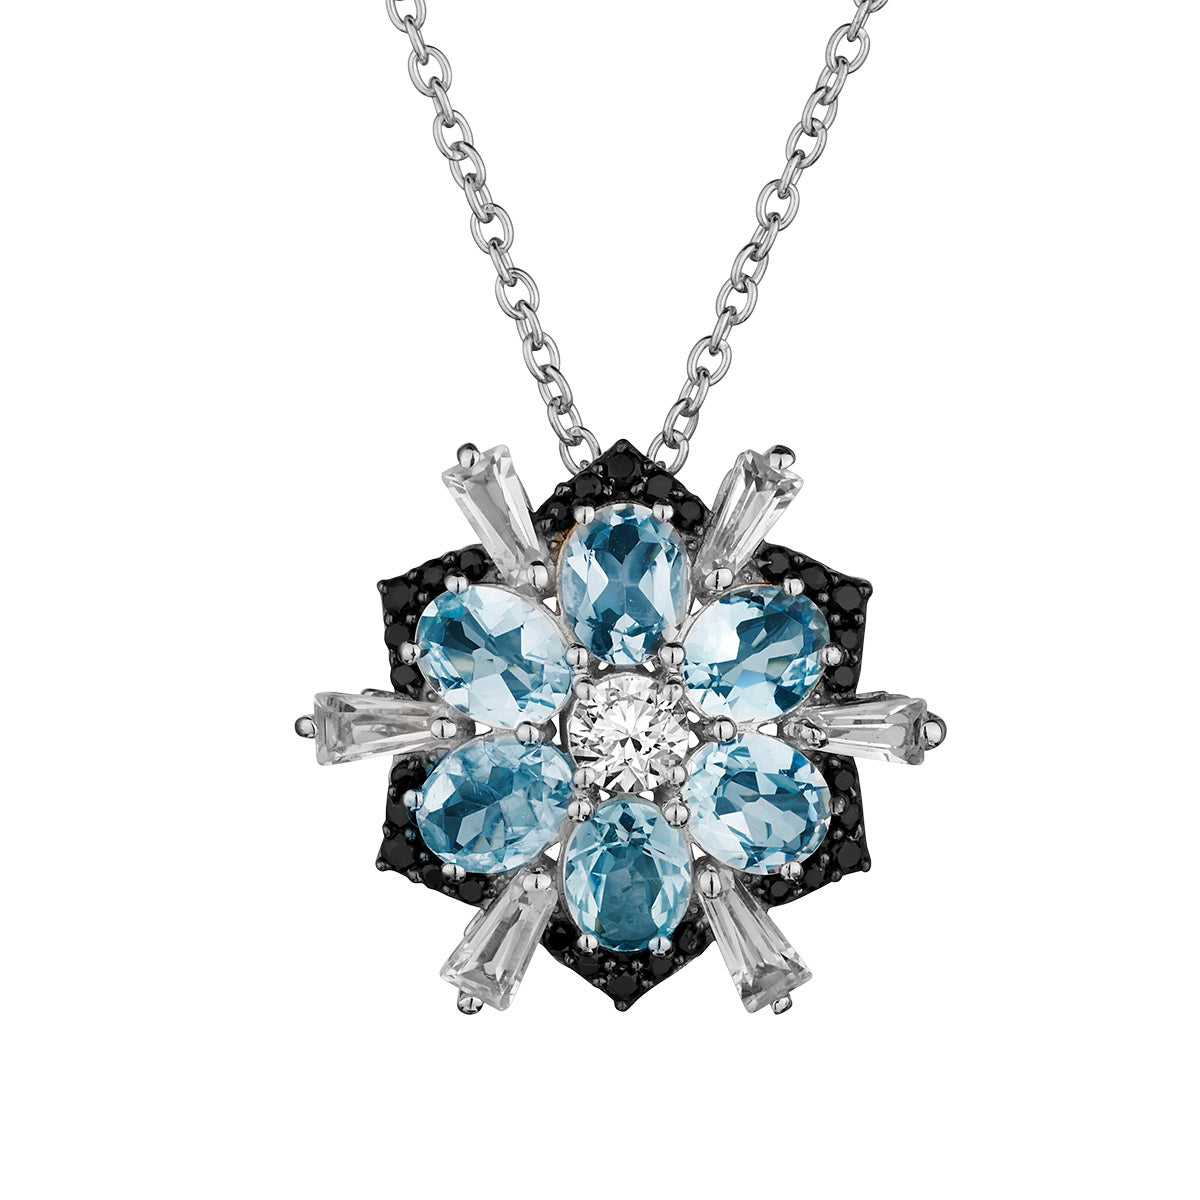 2.81 Carat Genuine Aquamarine & Zircon “Snowflake” Pendant,  Sterling Silver. Necklaces and Pendants. Griffin Jewellery Designs. 